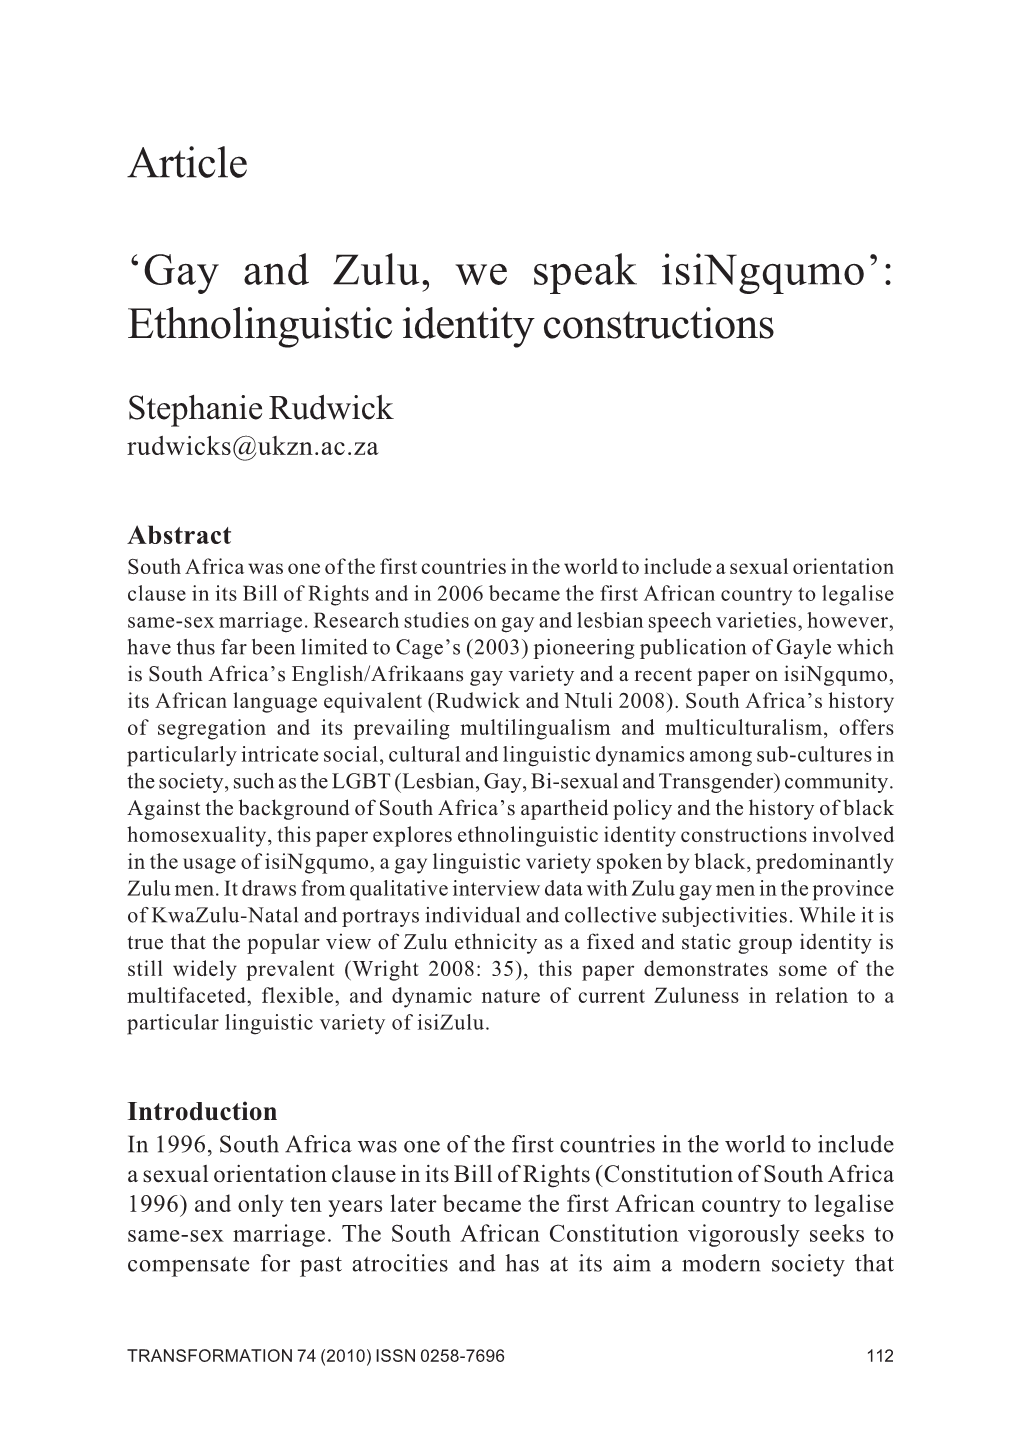 Gay and Zulu, We Speak Isingqumo’: Ethnolinguistic Identity Constructions